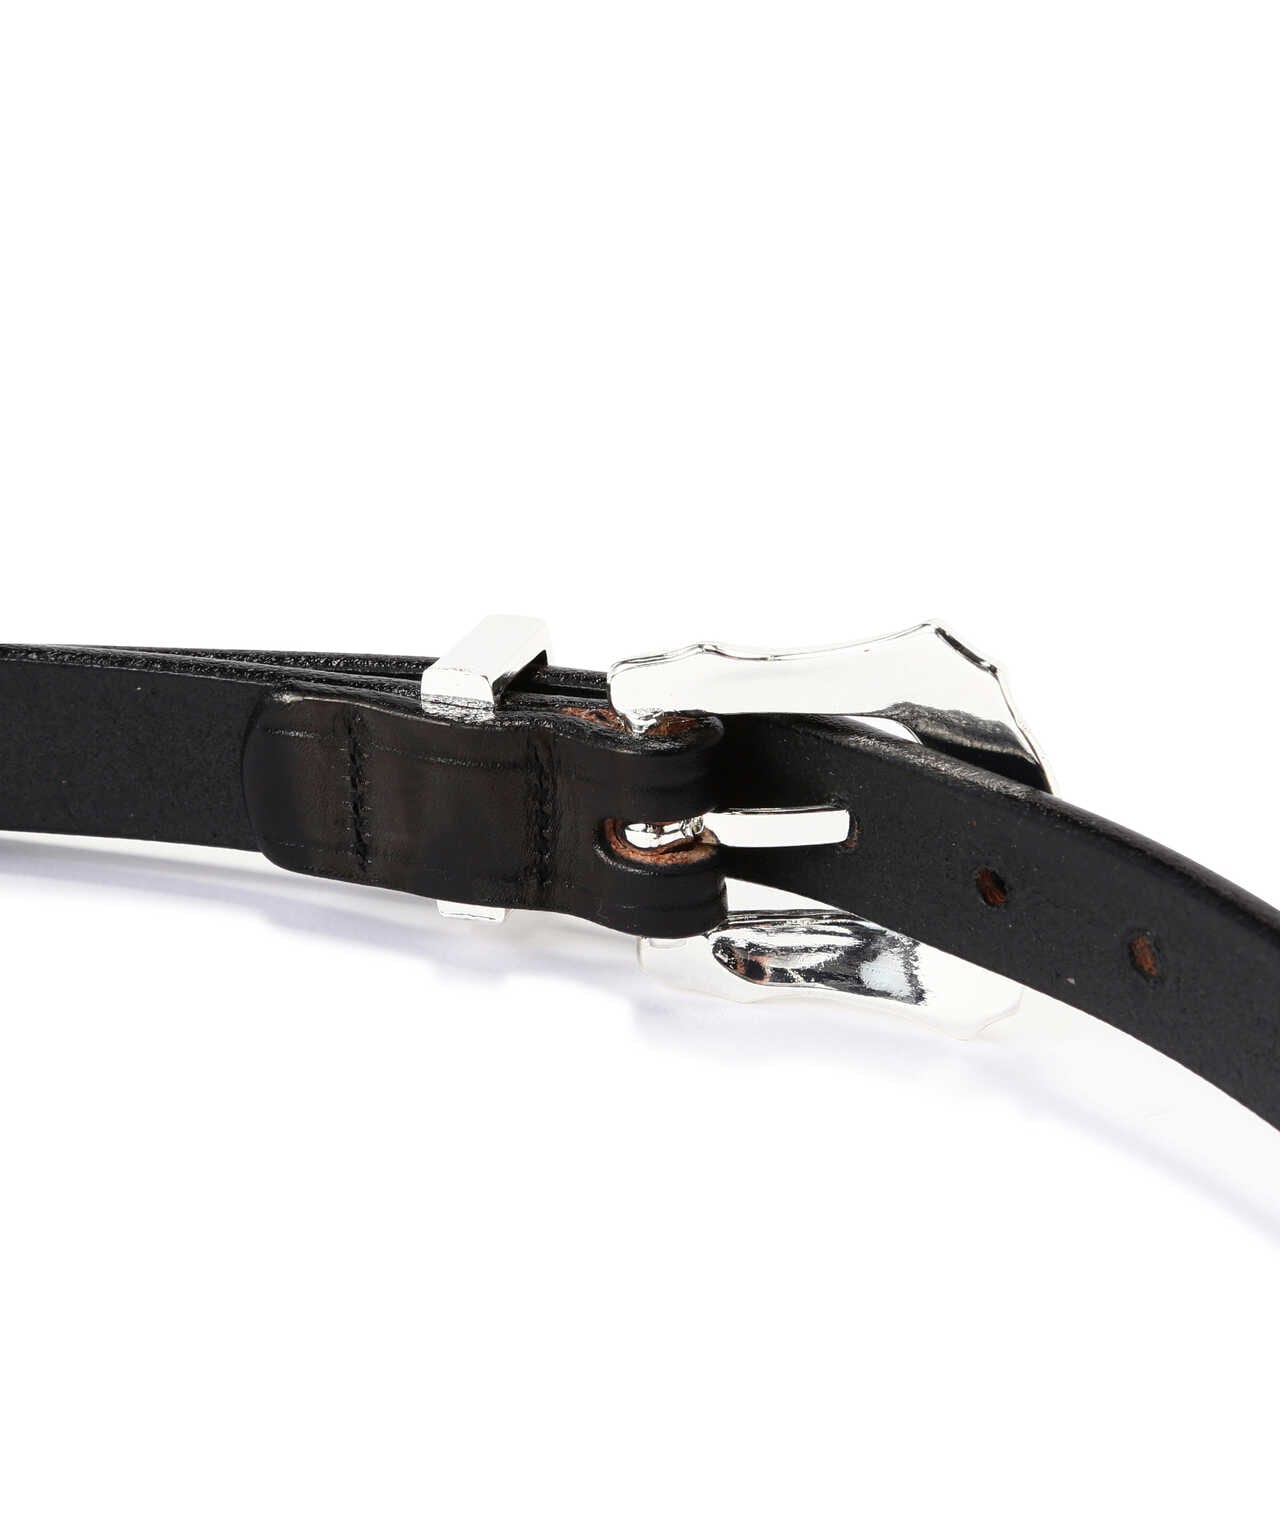 TORY LEATHER(トリーレザー) 3/4 inch 3-Piece Silver Buckle Set Belt